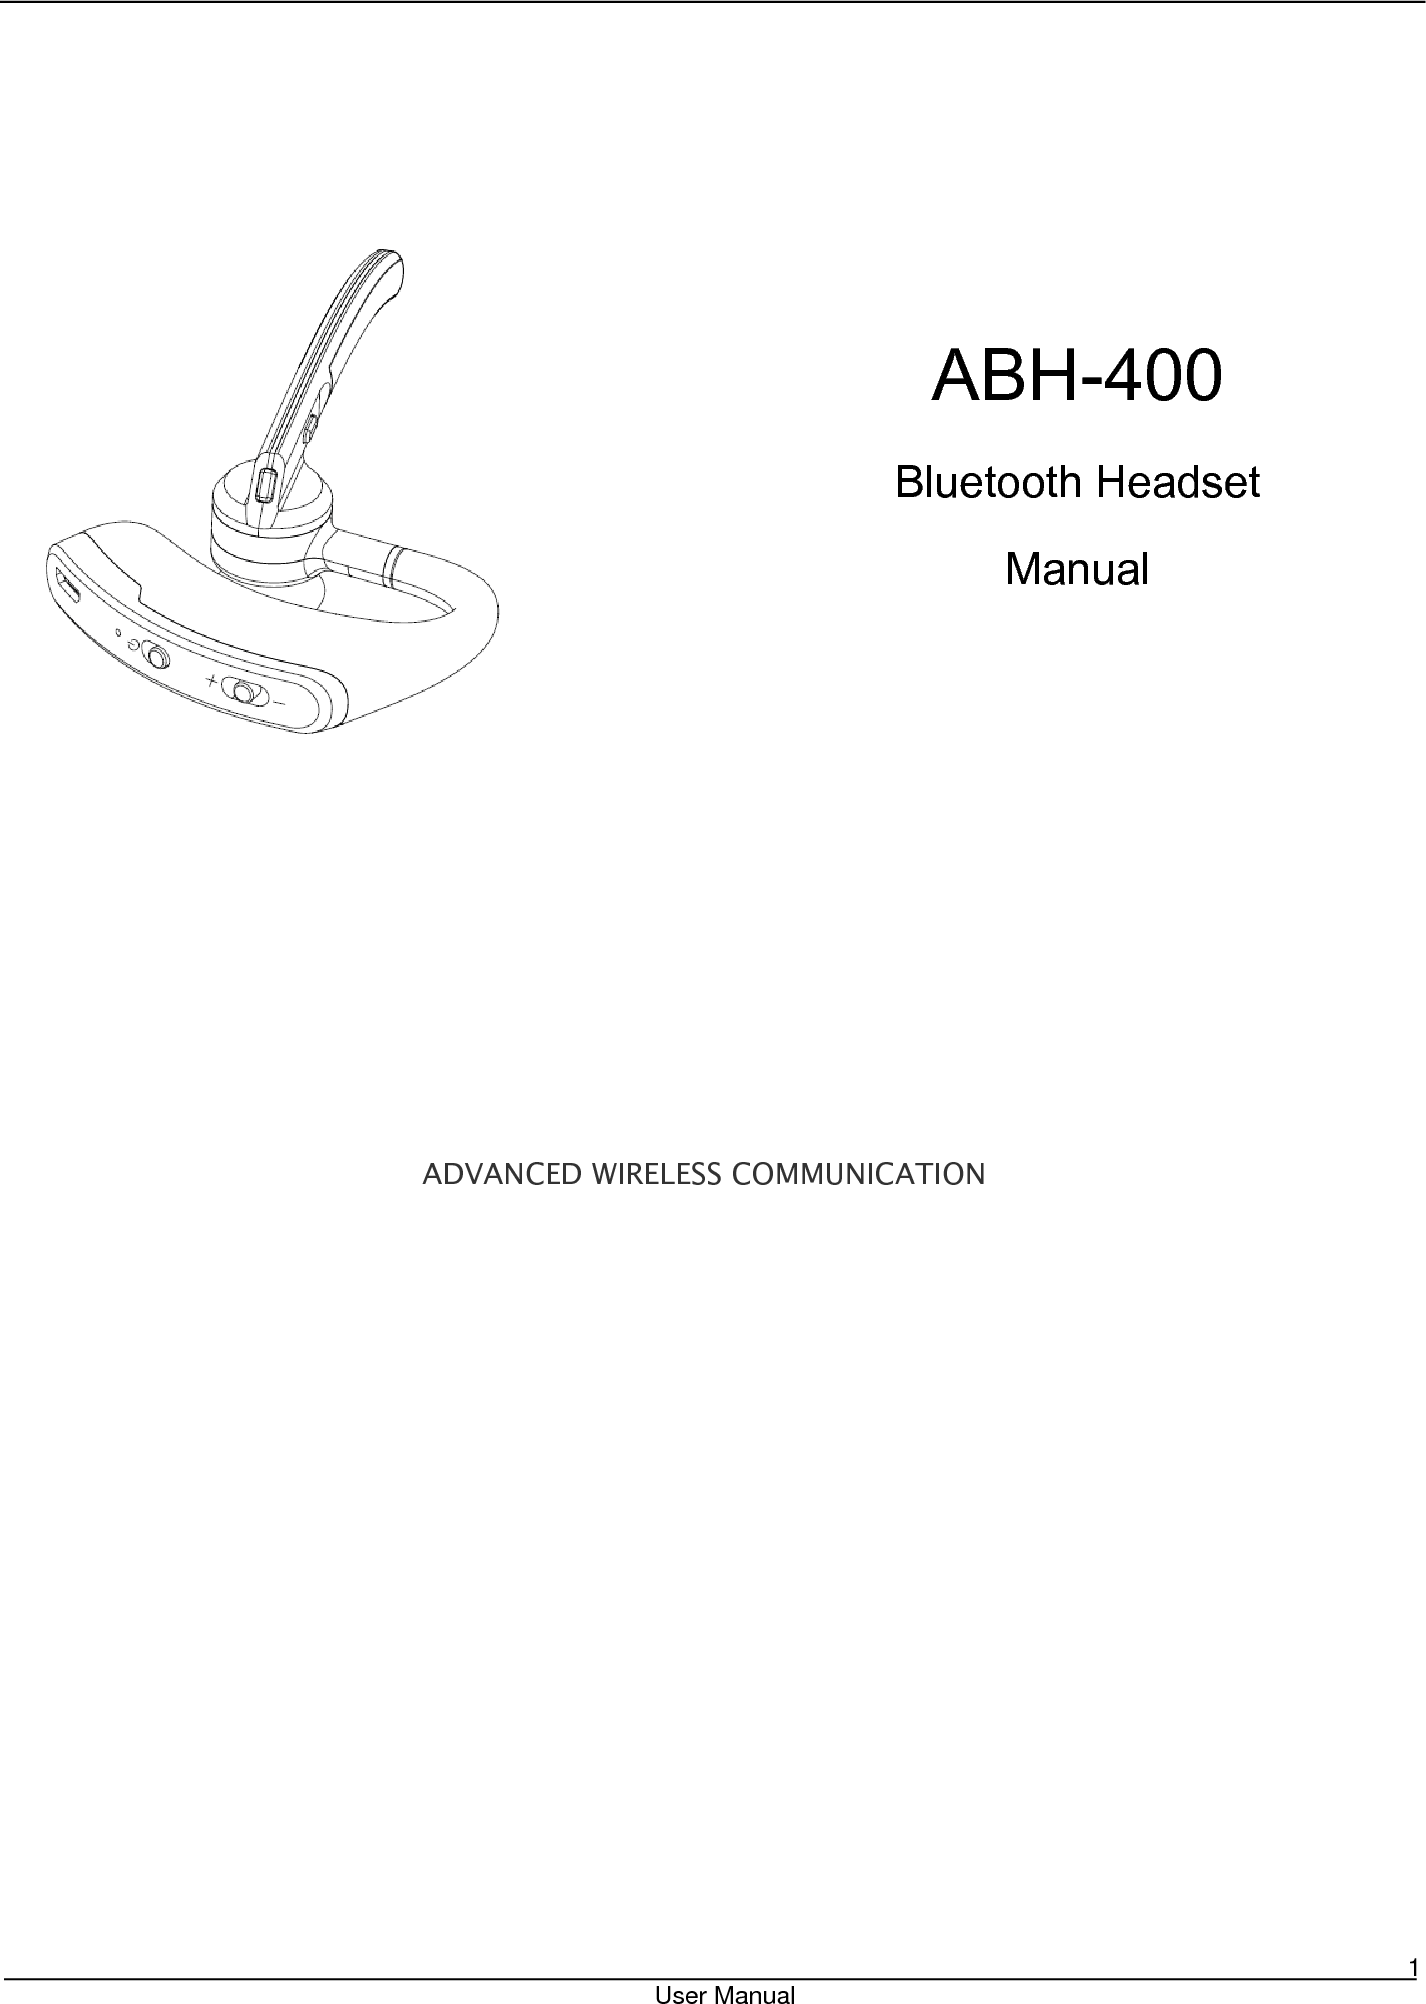                                                                       User Manual    1          ABH-400 Bluetooth Headset   Manual        ADVANCED WIRELESS COMMUNICATION         